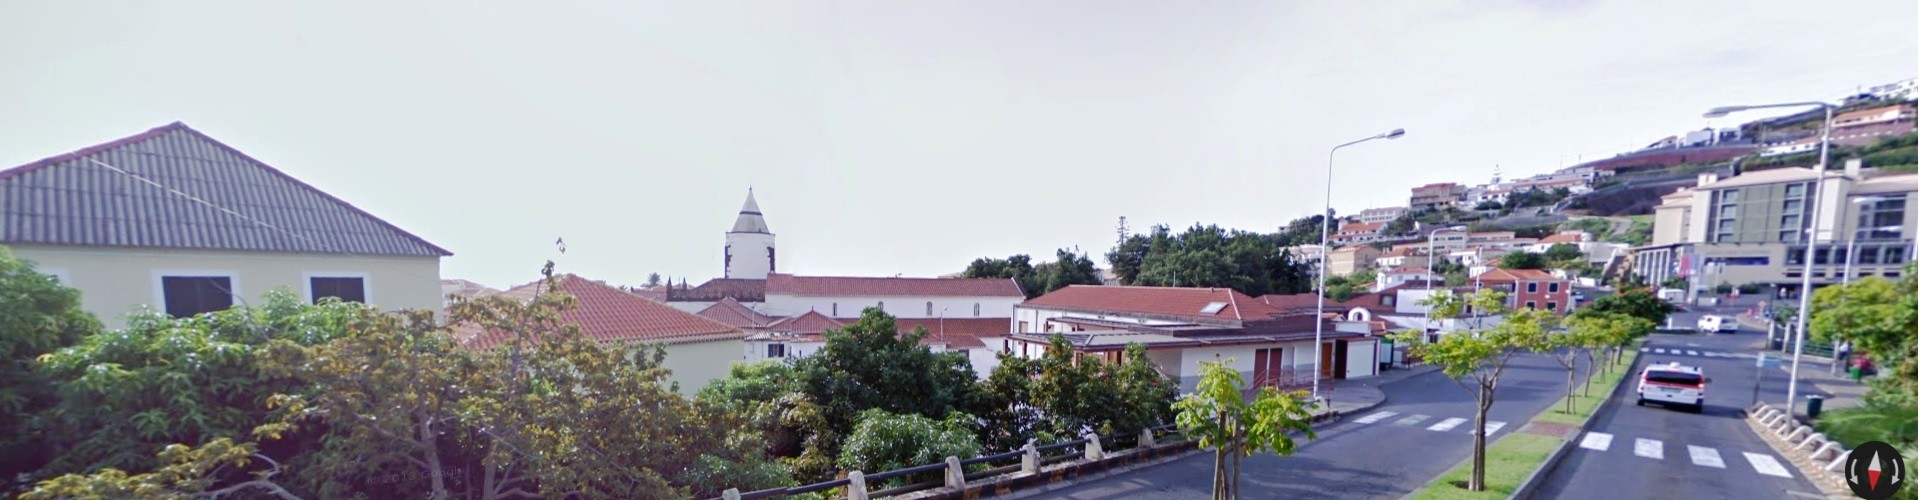 Sao Salvador Church, Santa Cruz, Madeira